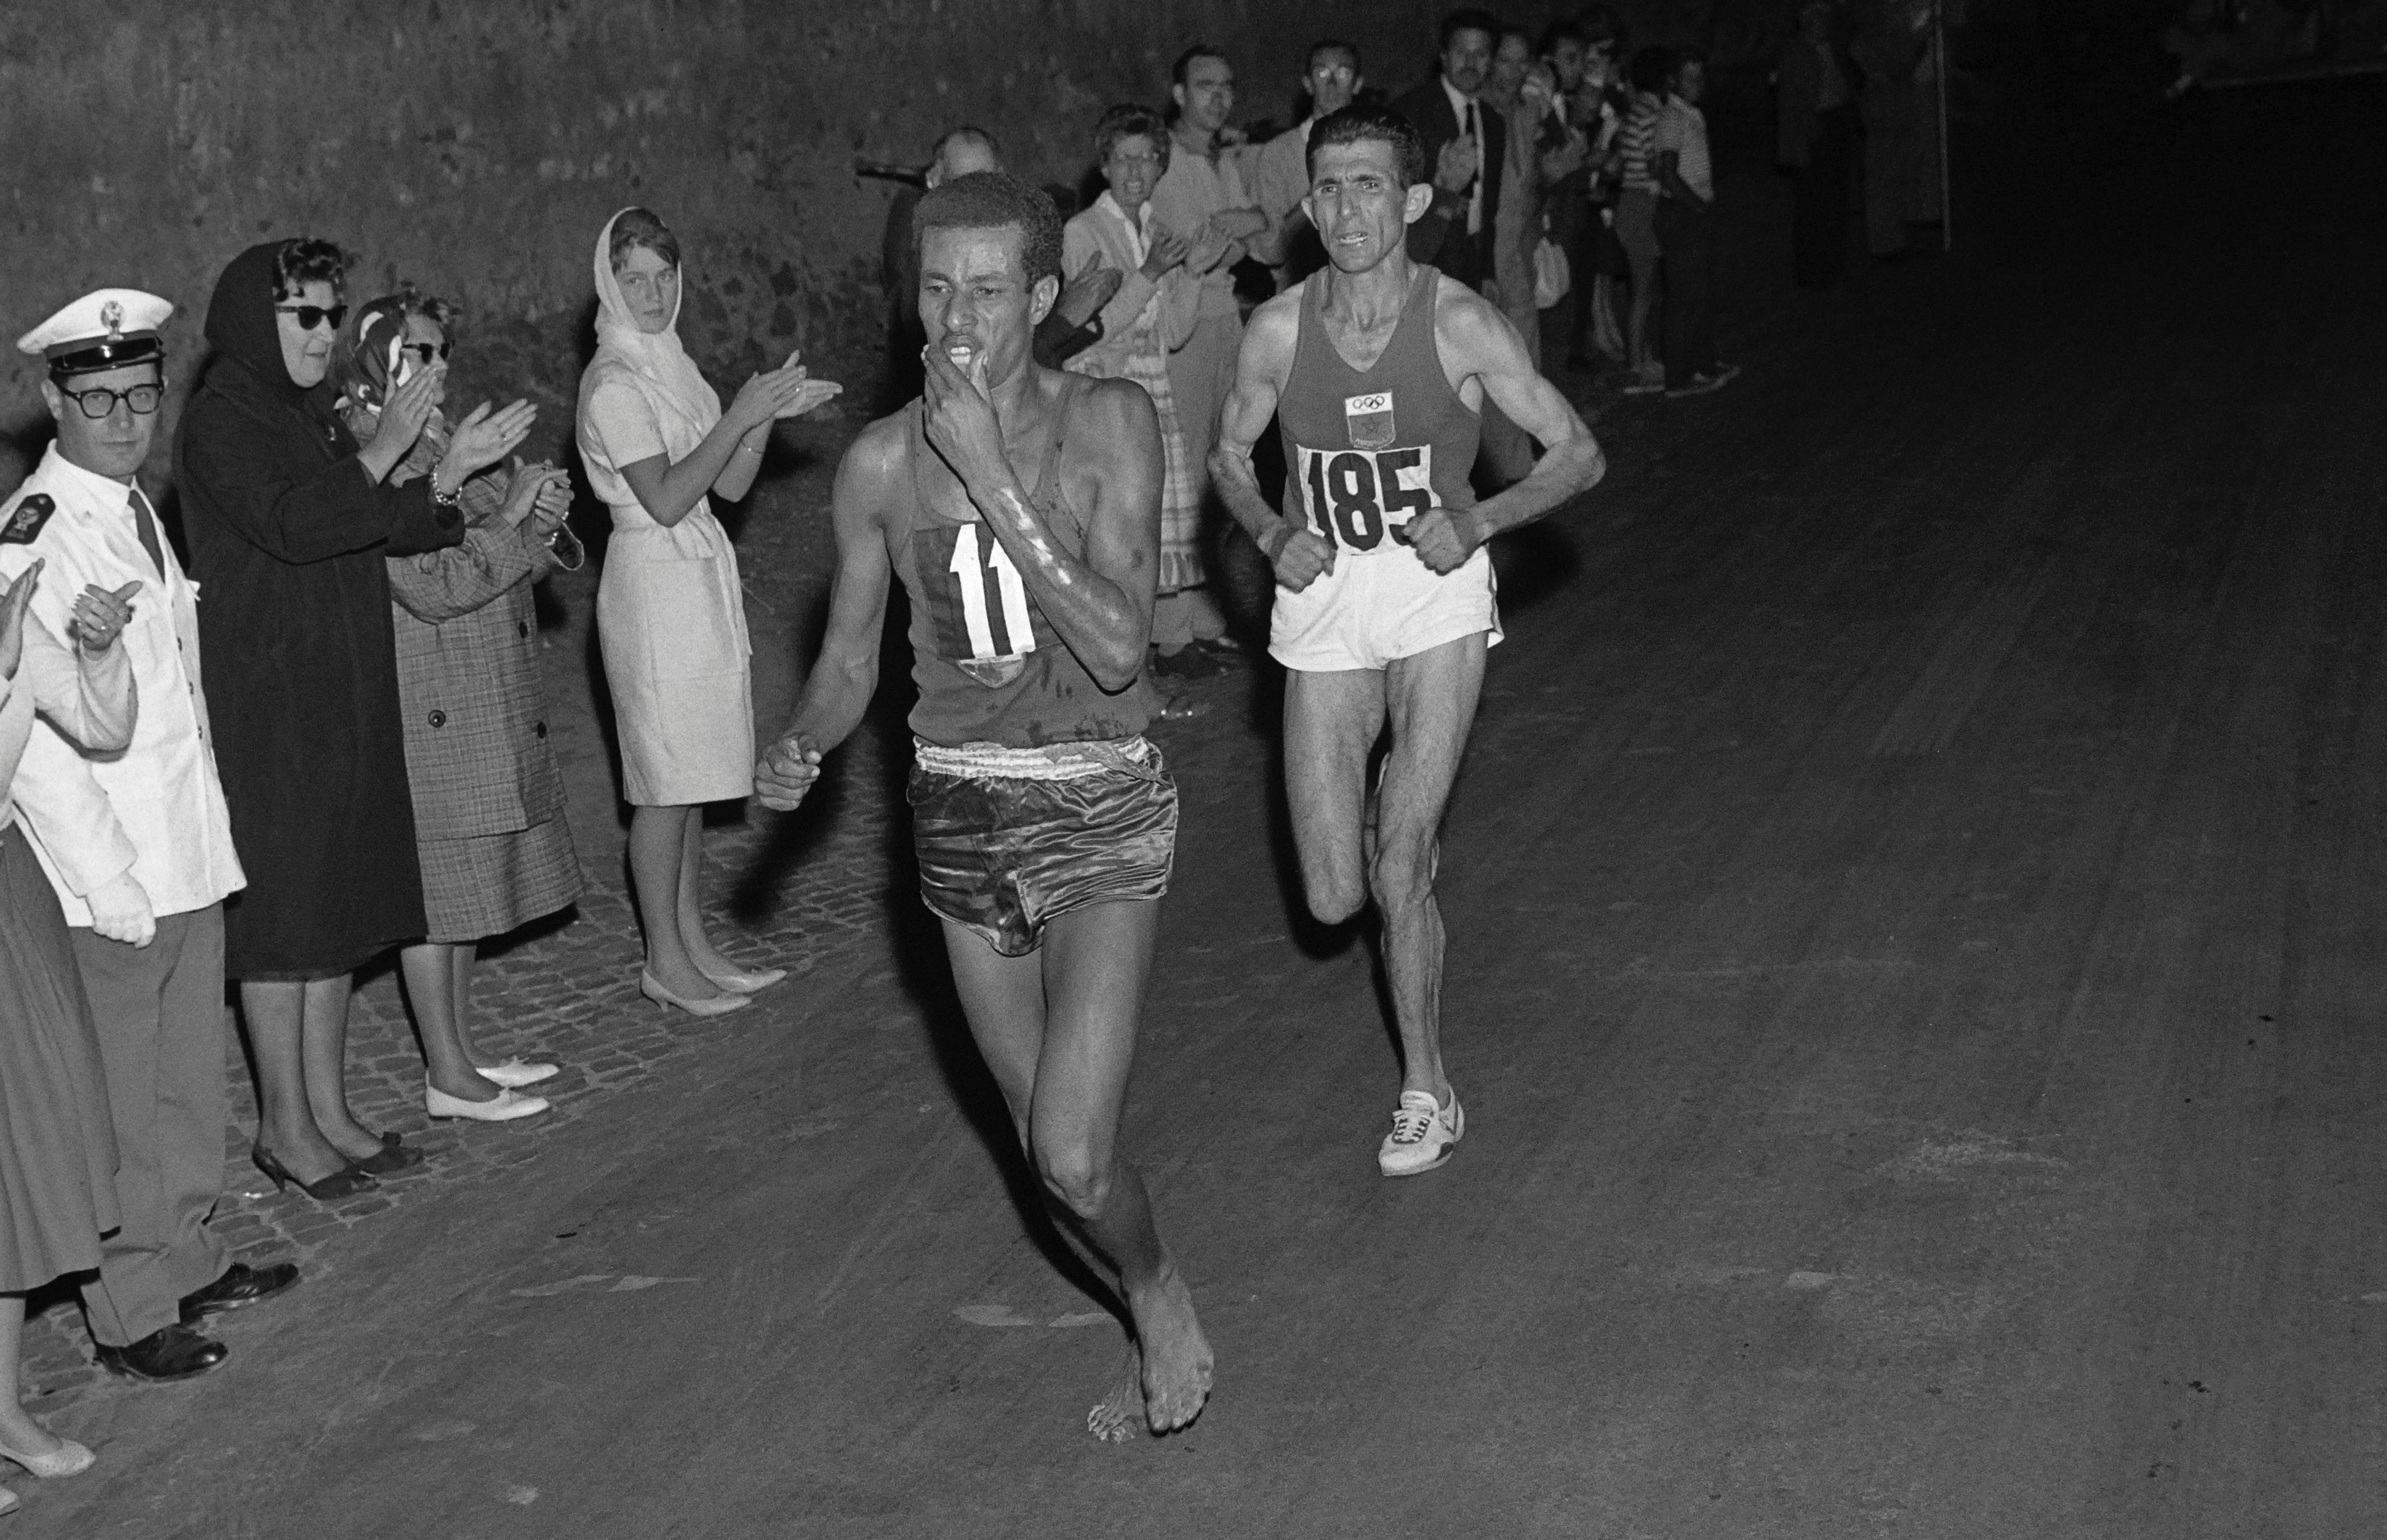 Etiopski atletiar Abebe Bikila stigao je bos do zlata u maratonu na Olimpijskim igrama 1960./Getty Images